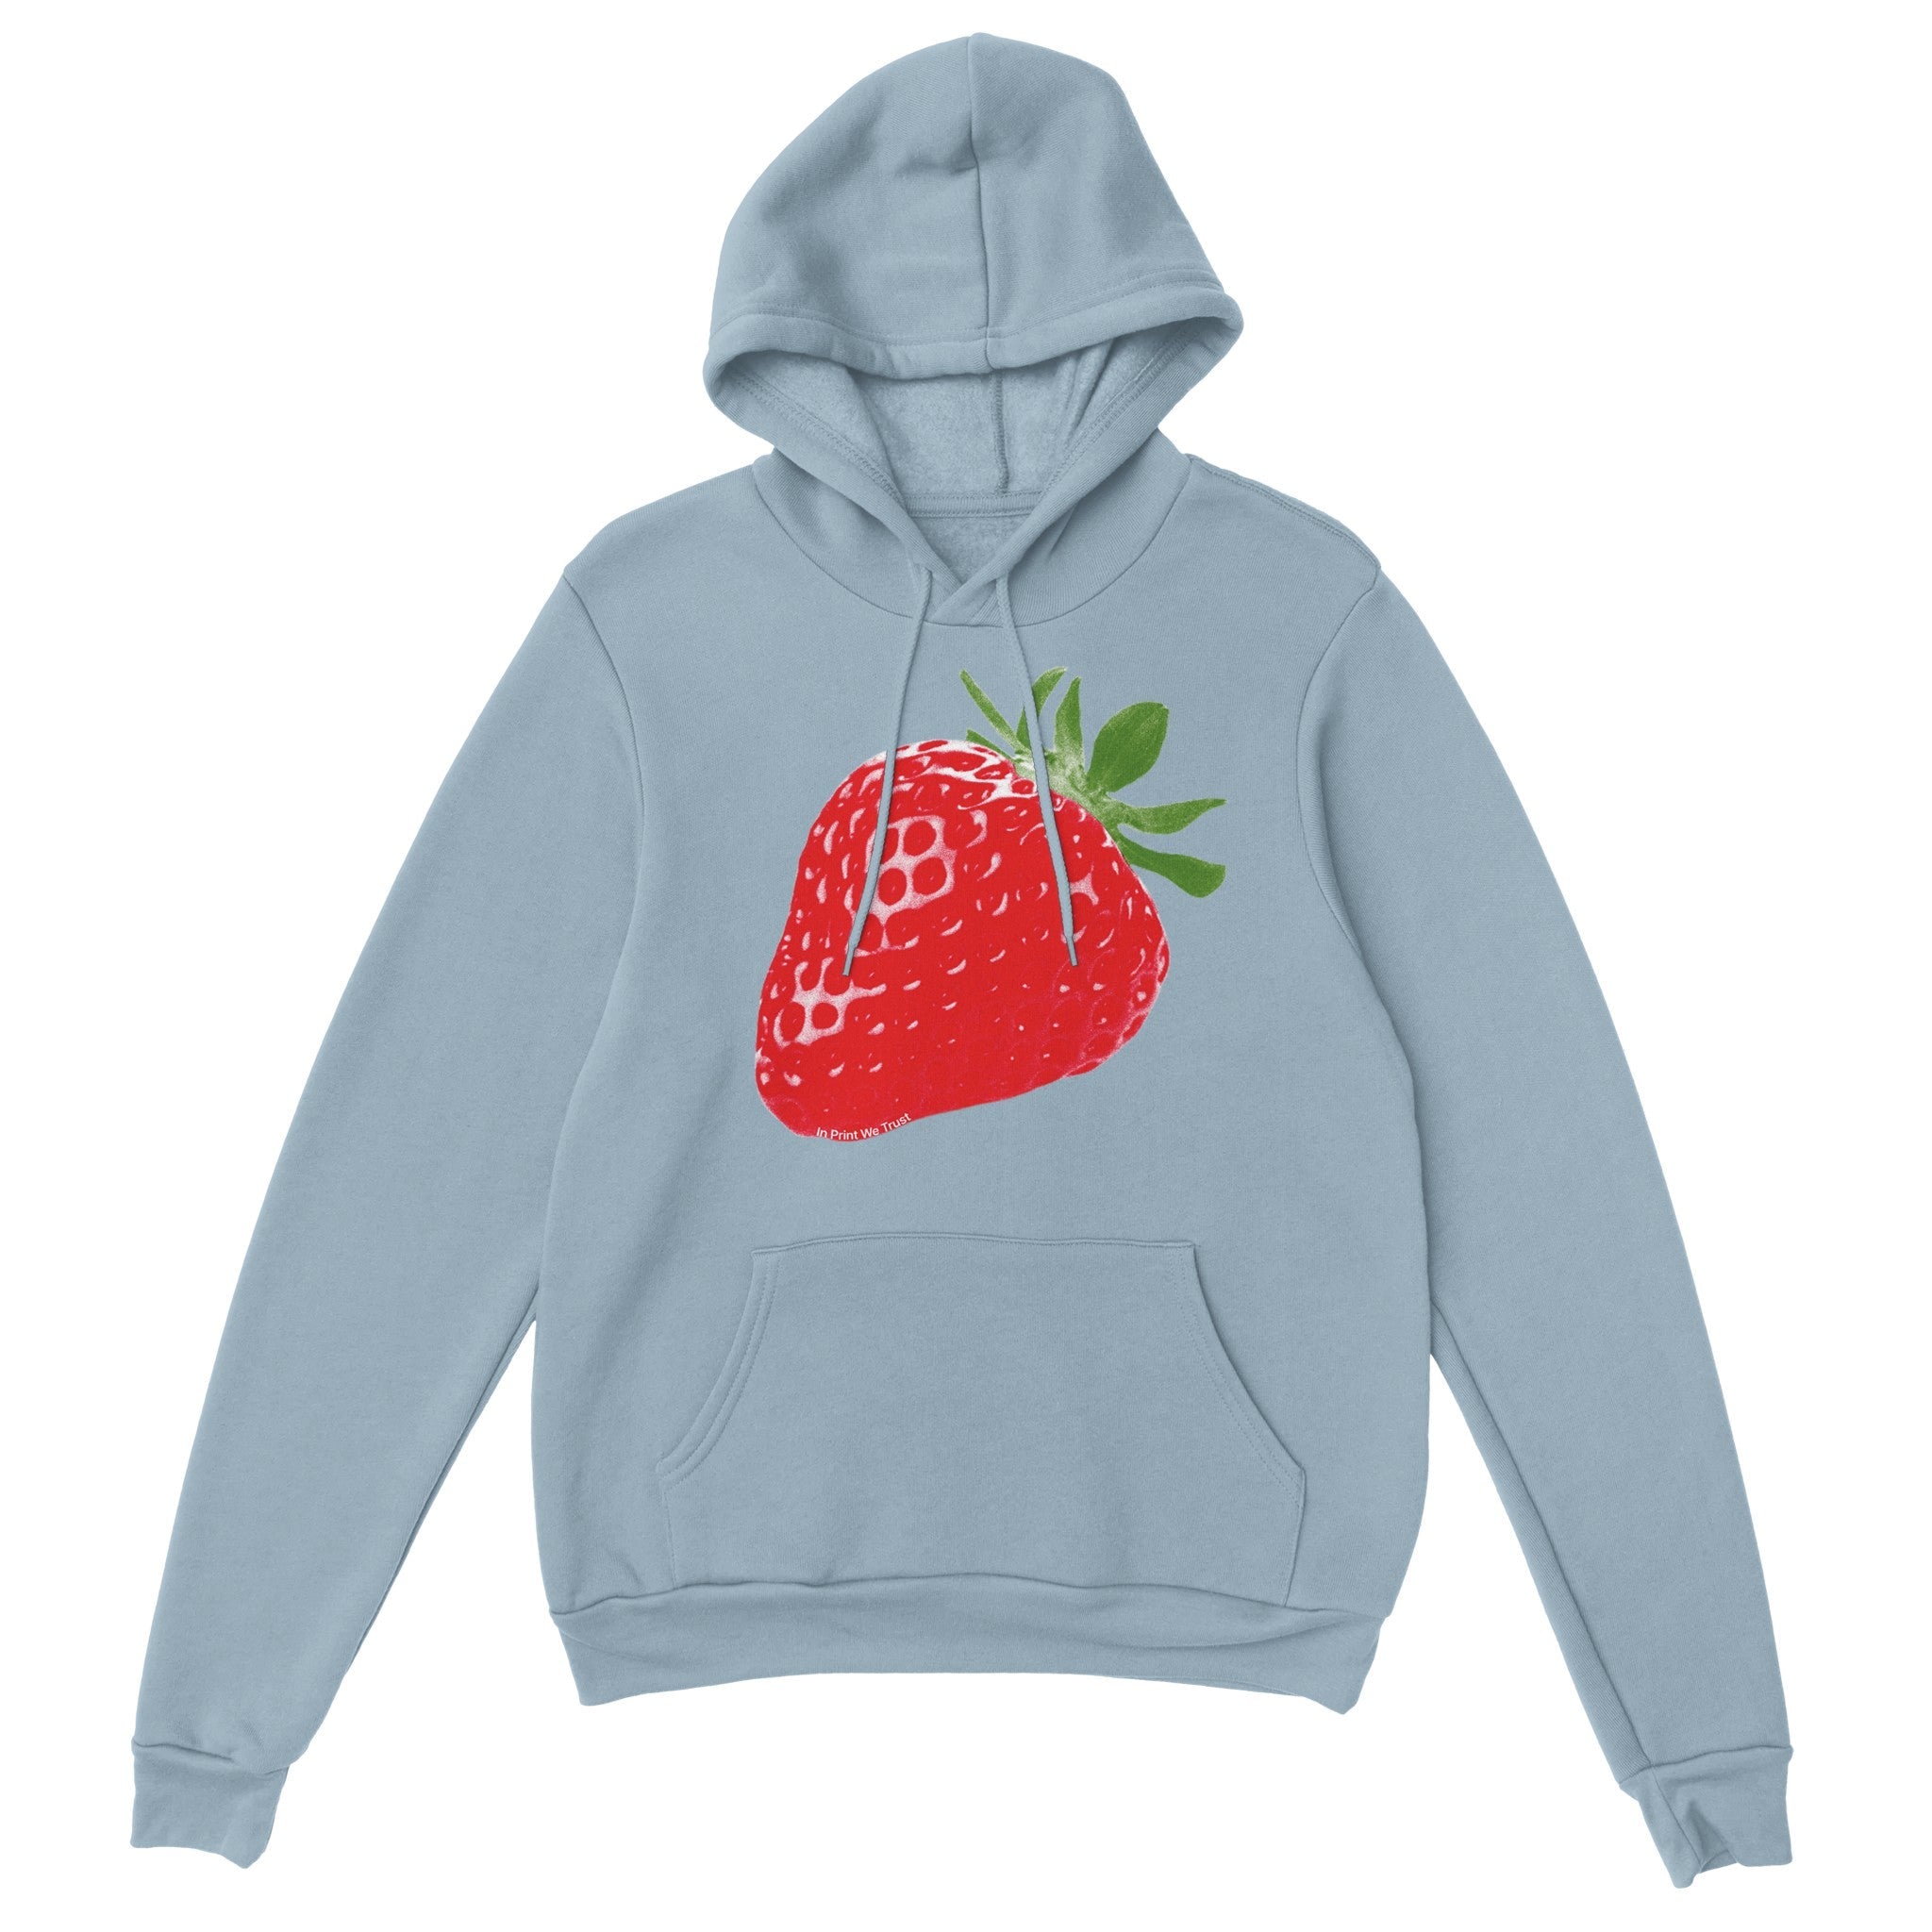 'Strawberry Fields' hoodie - In Print We Trust